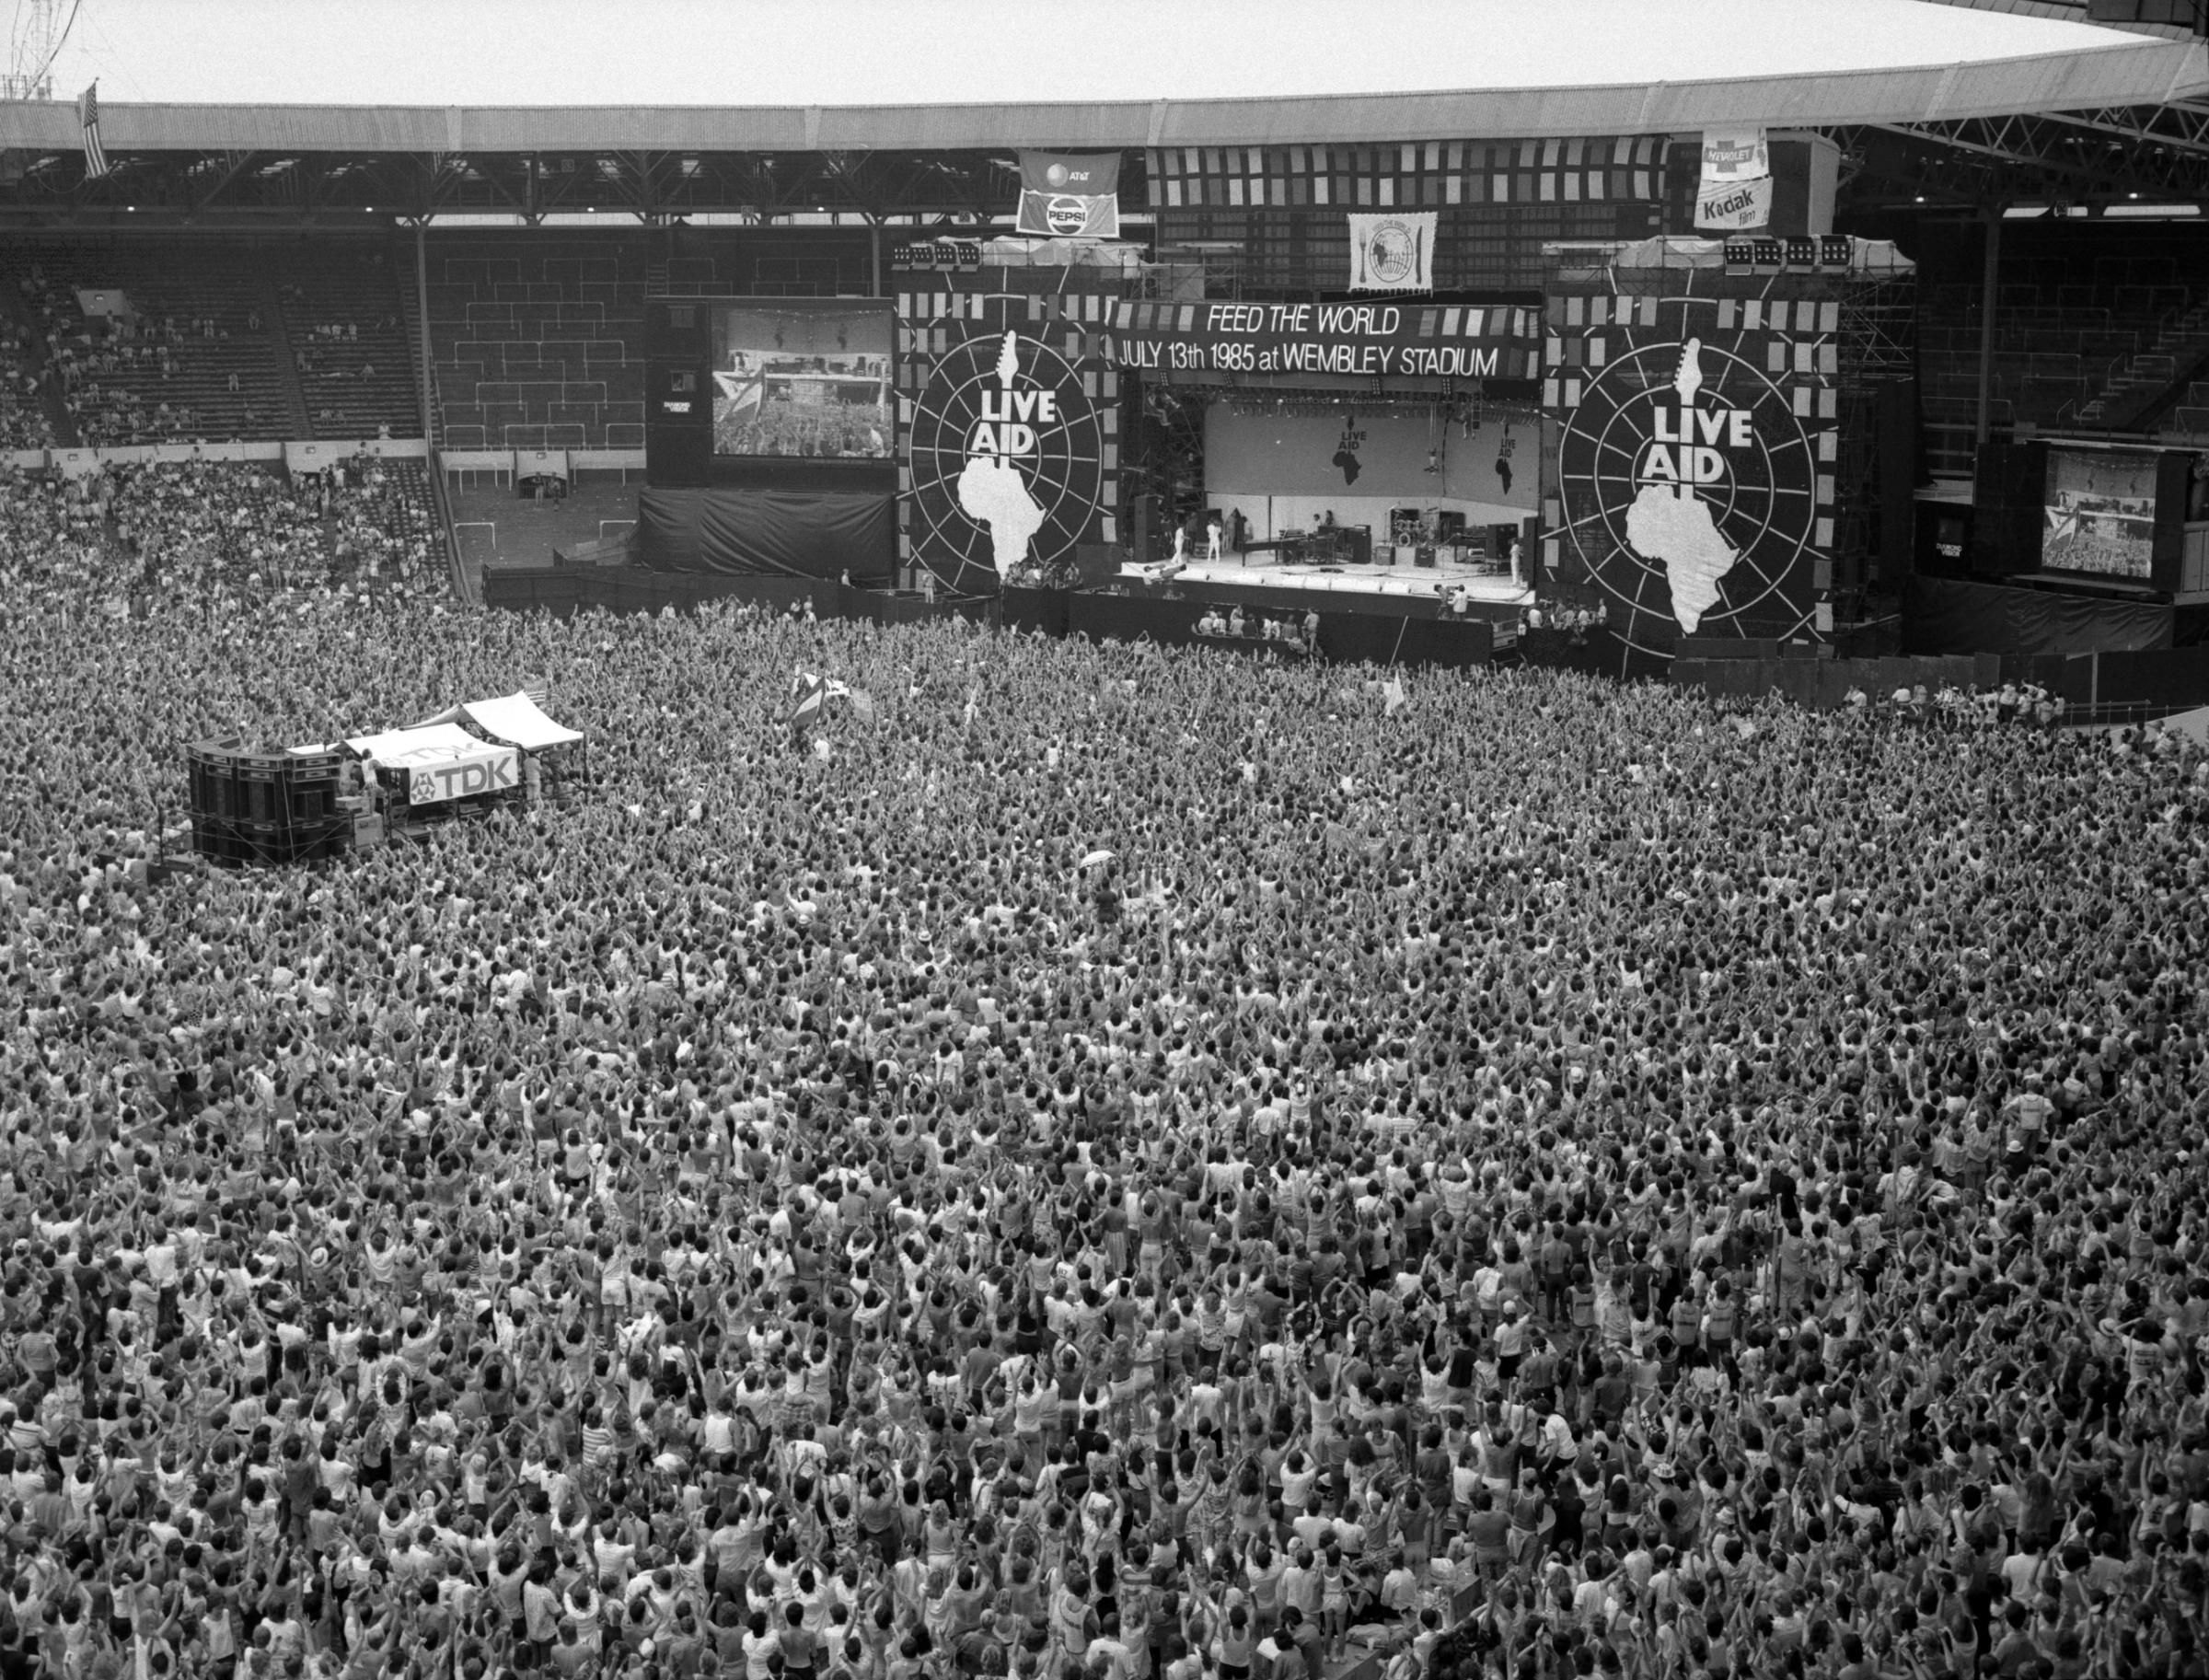 Меркьюри стадион. Концерт Квин Уэмбли 1985. Куин 1985 стадион Уэмбли. Фредди Меркьюри концерт Уэмбли 1985. Концерт Live Aid 1985 Queen.